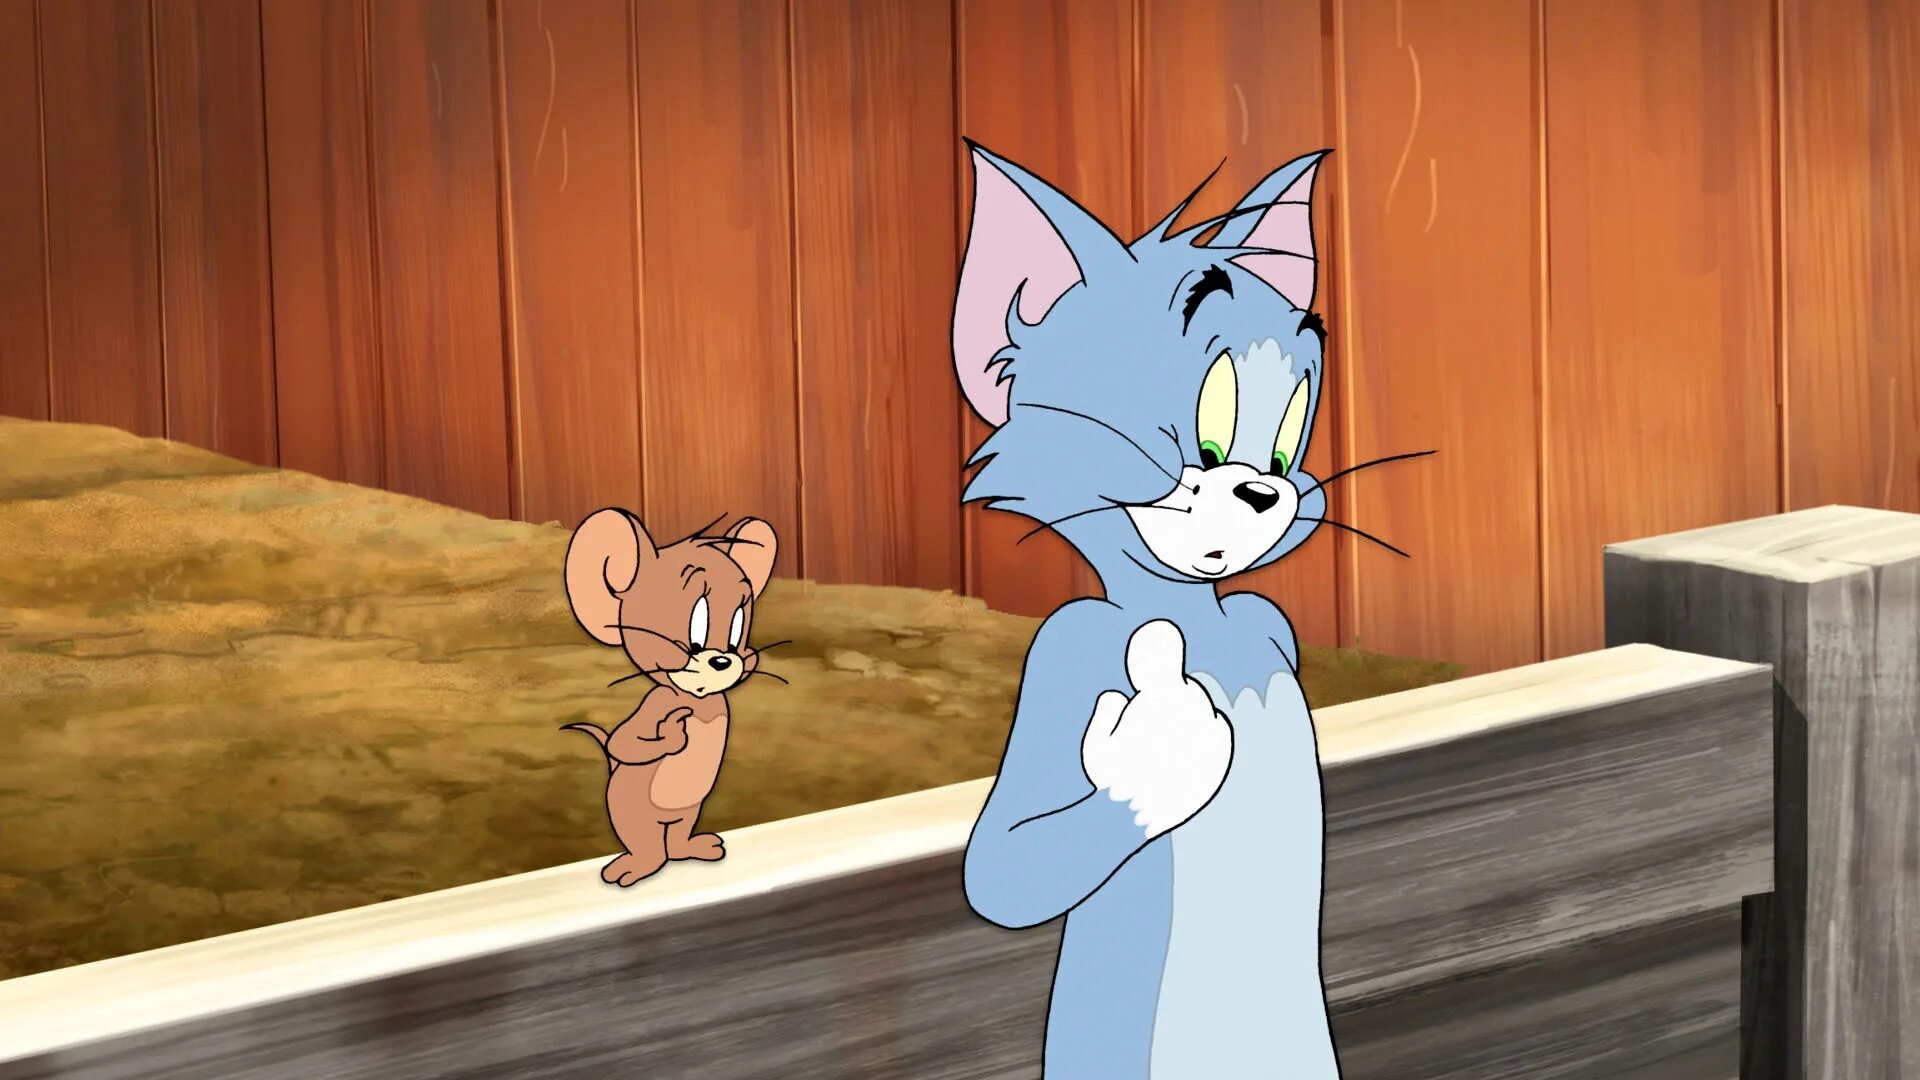 Jerry том и джерри. Tom and Jerry. Том и Джерри 1960. Том и Джерри Tom and Jerry.